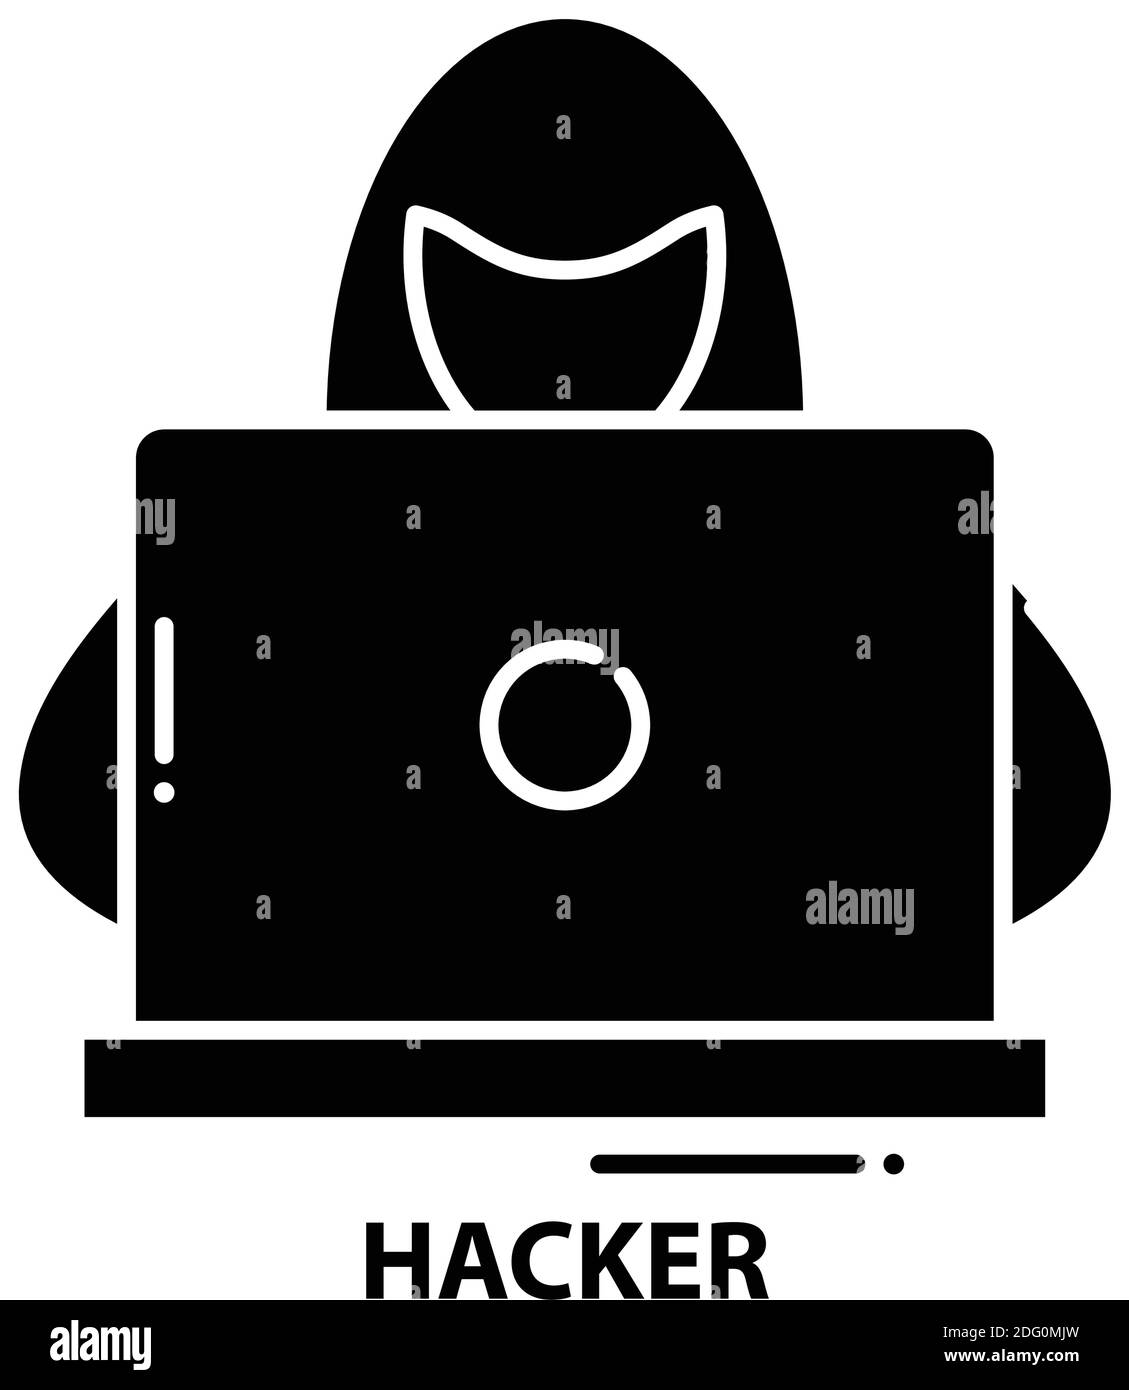 hacker symbol icon, black vector sign with editable strokes, concept illustration Stock Vector